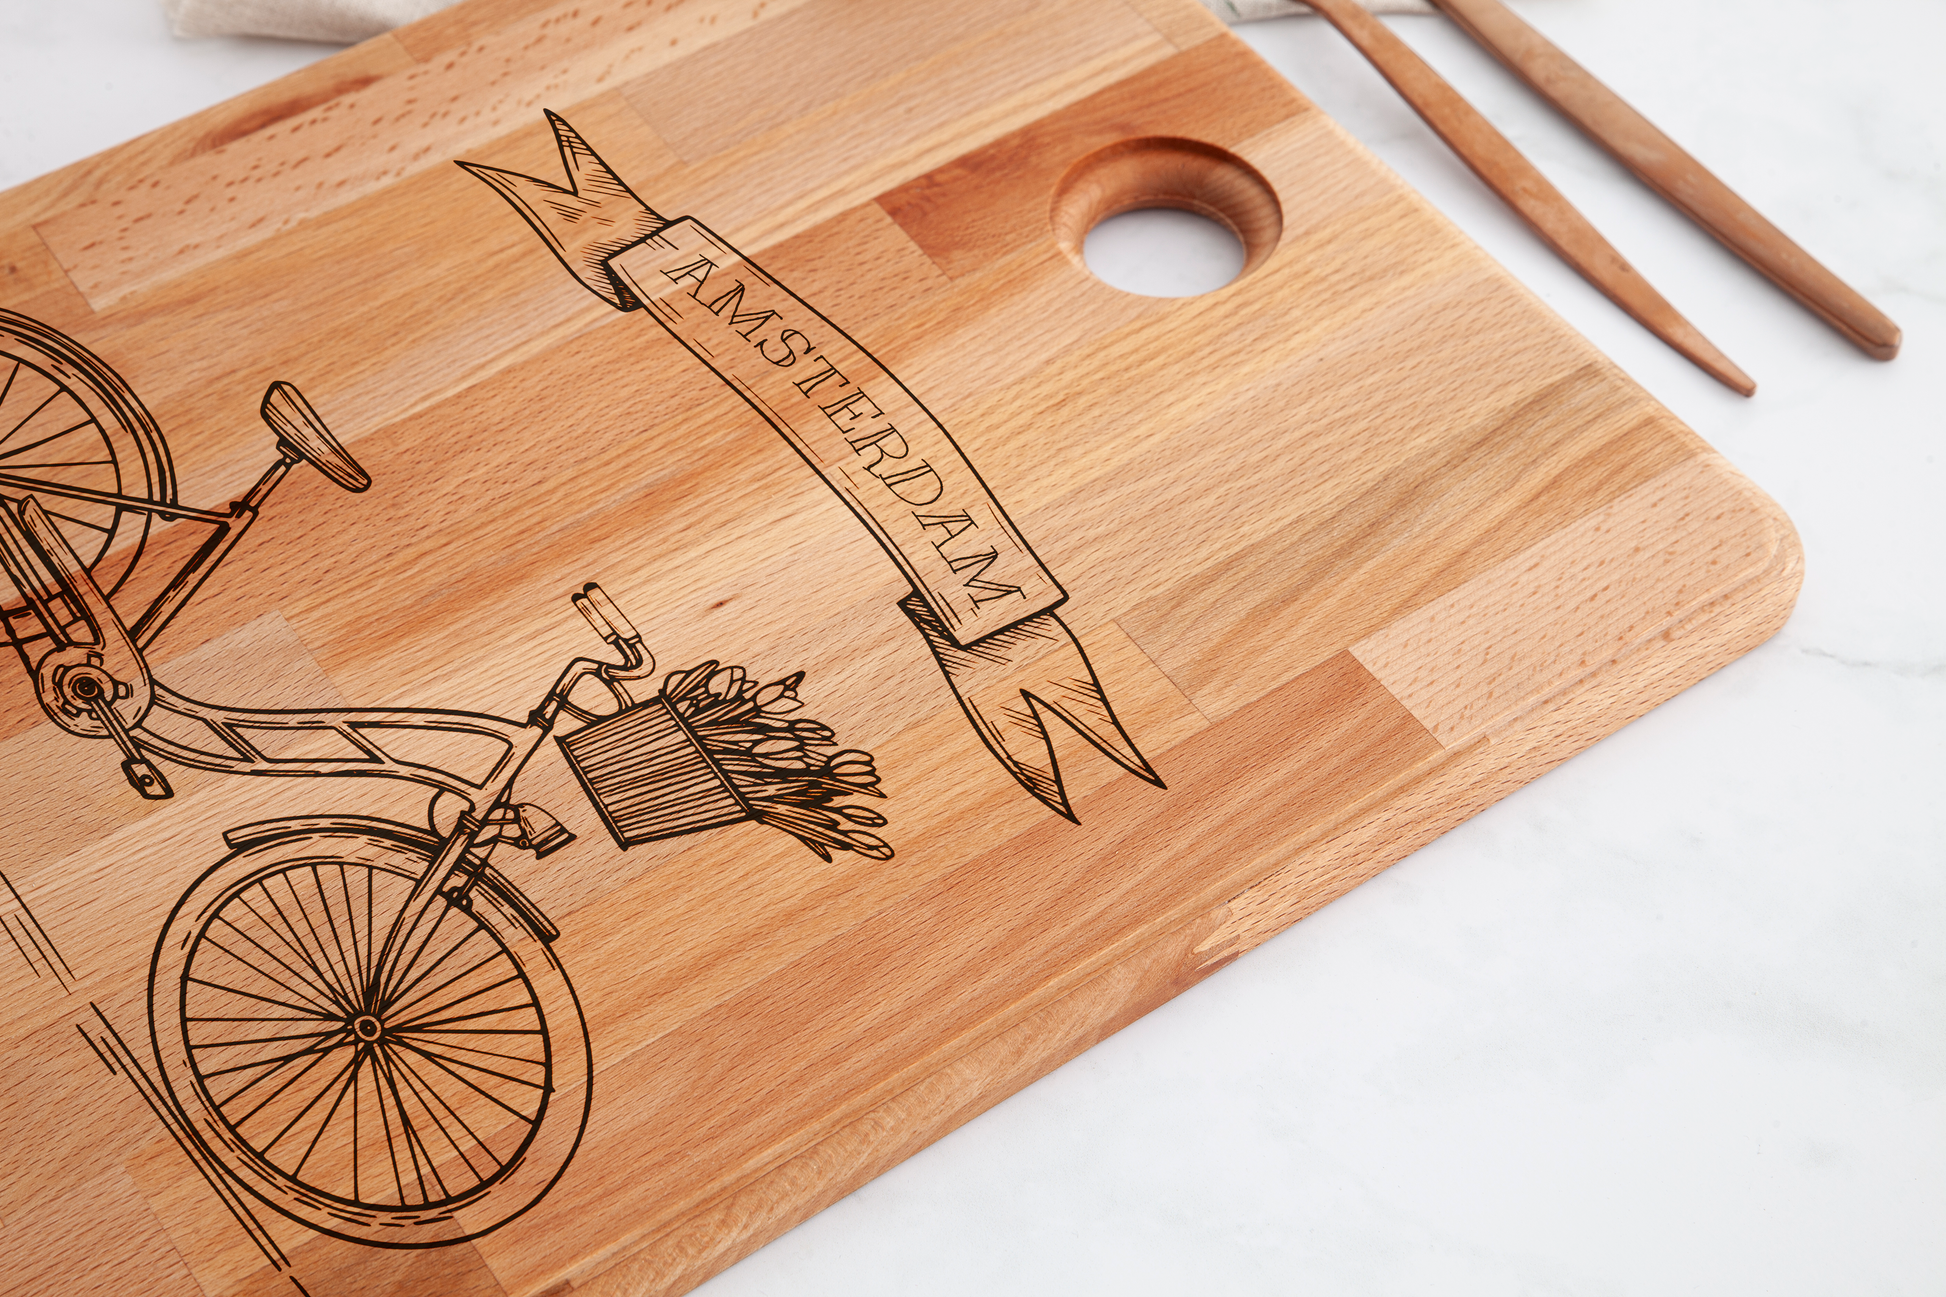 Amsterdam, Bicycle, cutting board, wood grain